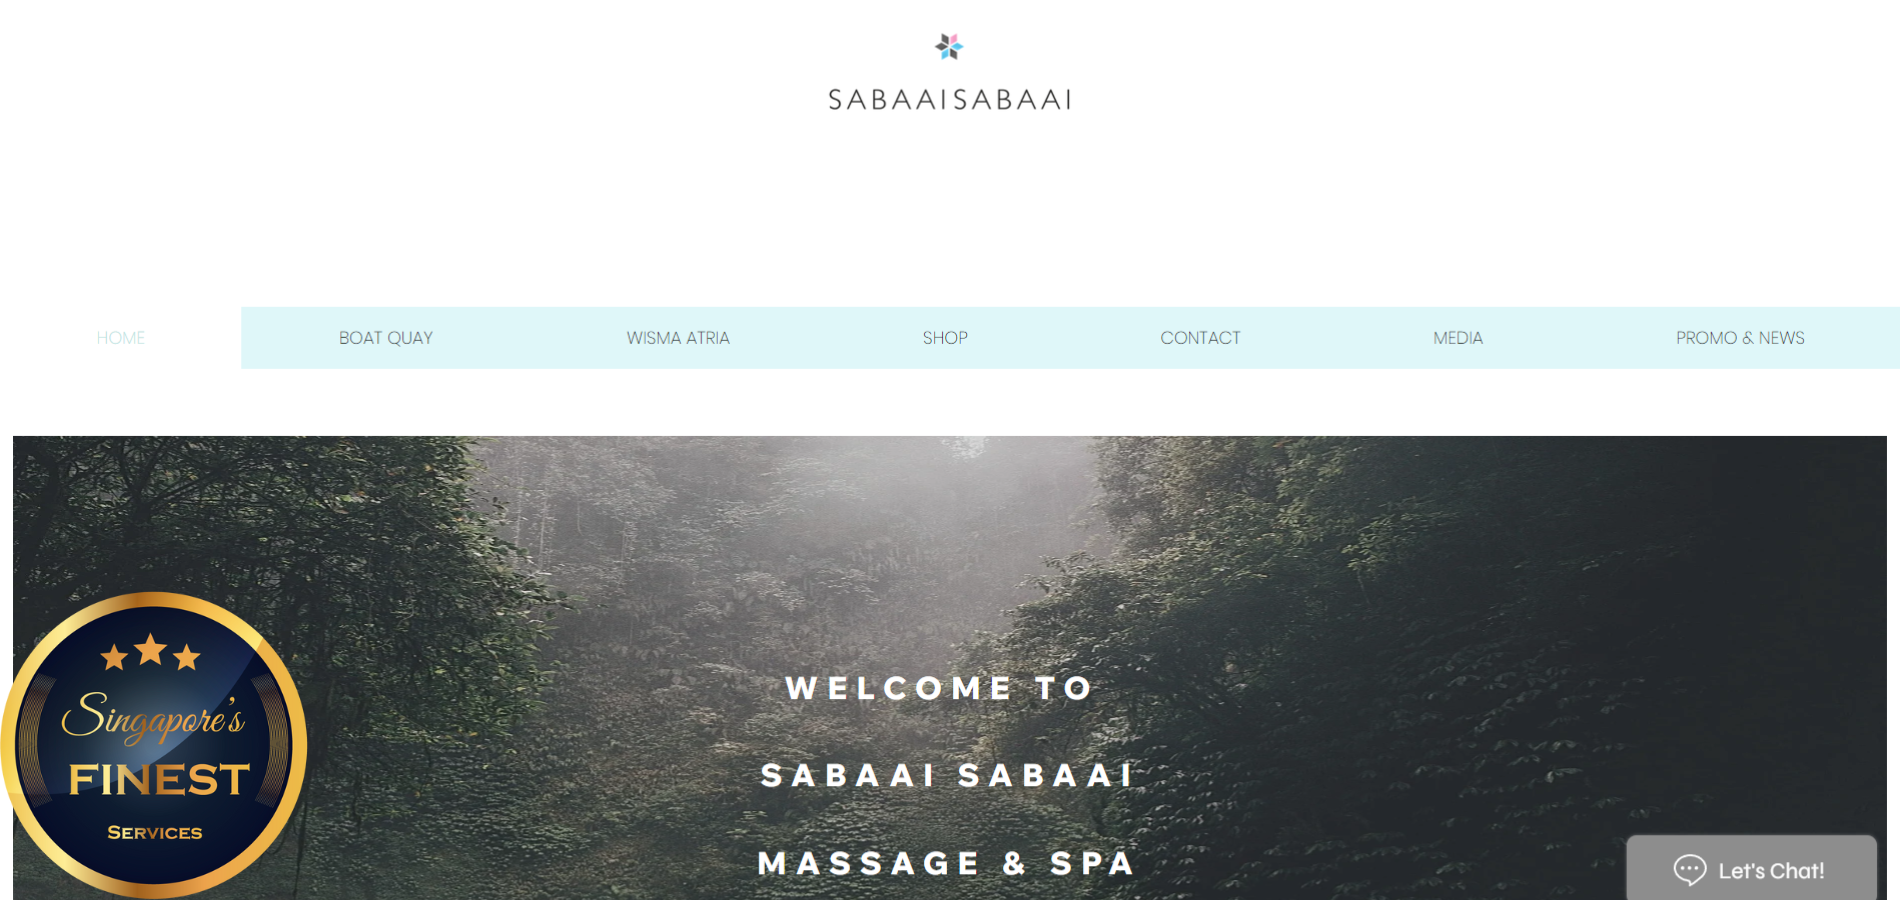 The Finest Thai Massage Spas in Singapore